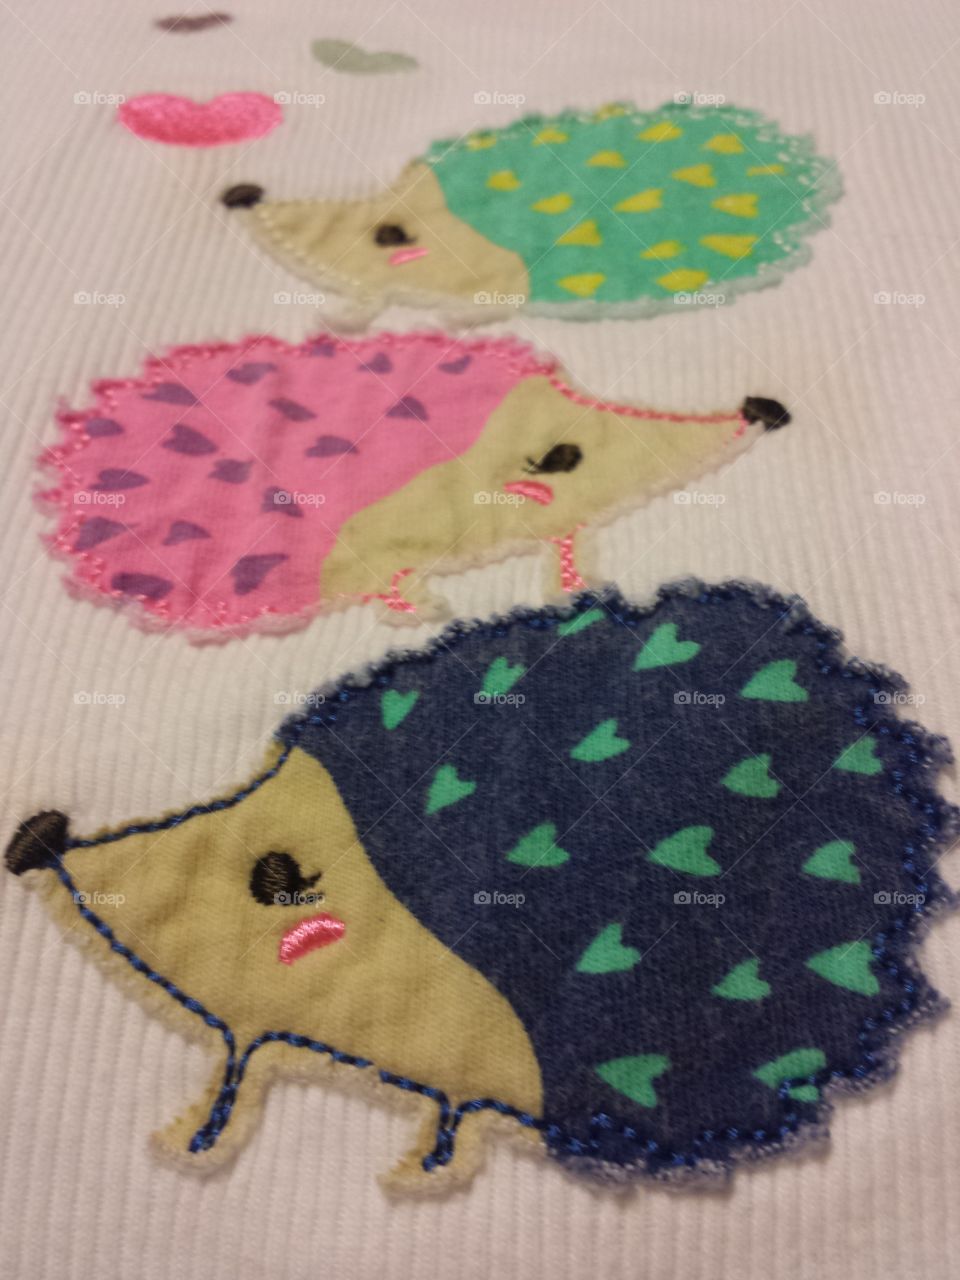 Hedgehog design on fabric textile